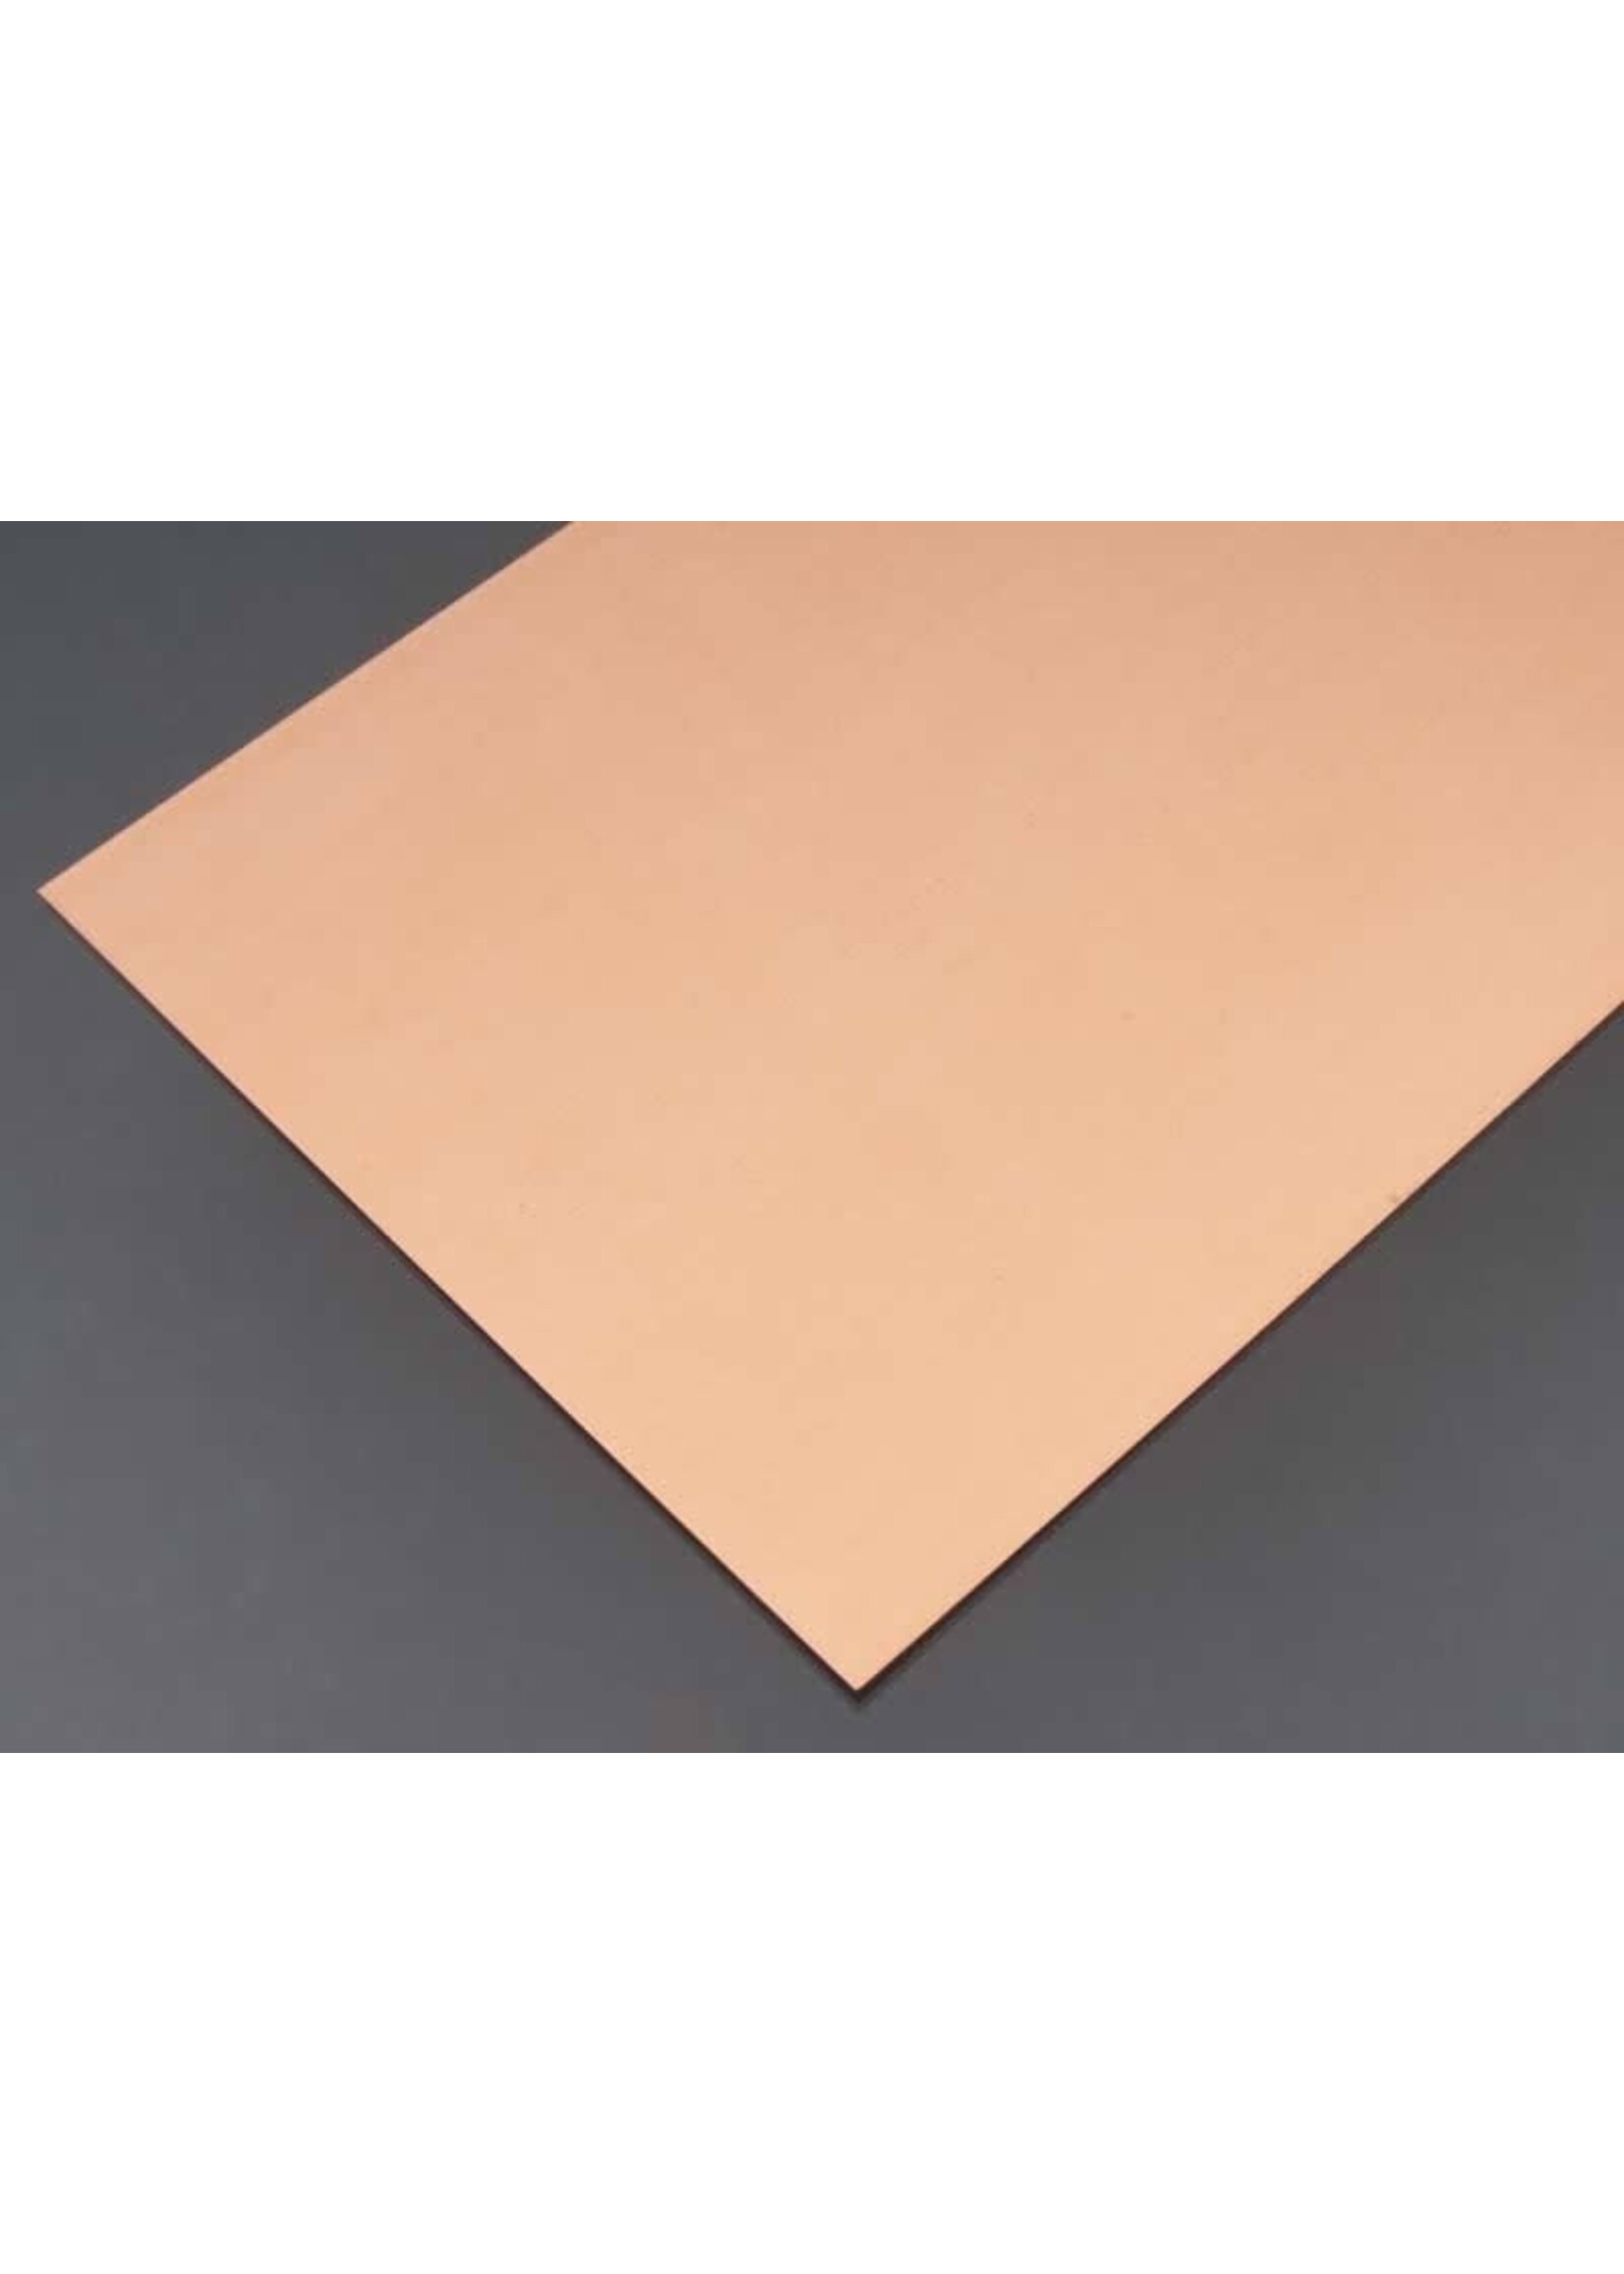 K&S Metals KSE01217 .025x6x12 Copper Sheet (1pc)